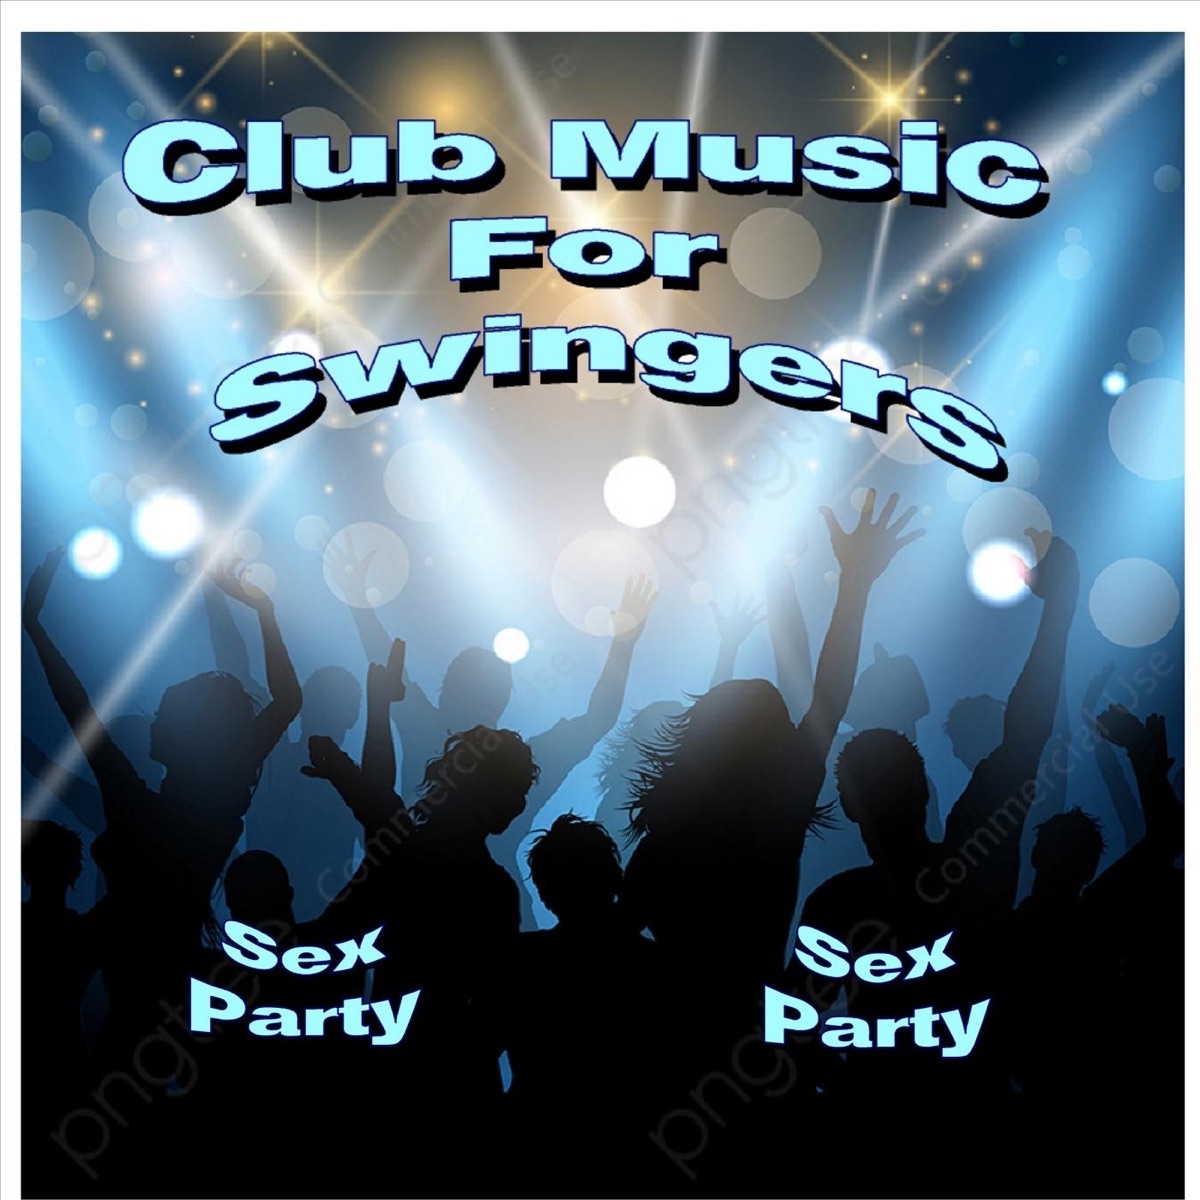 Club Music for Swingers Sex Party - Album by Triplexxxsounds pic